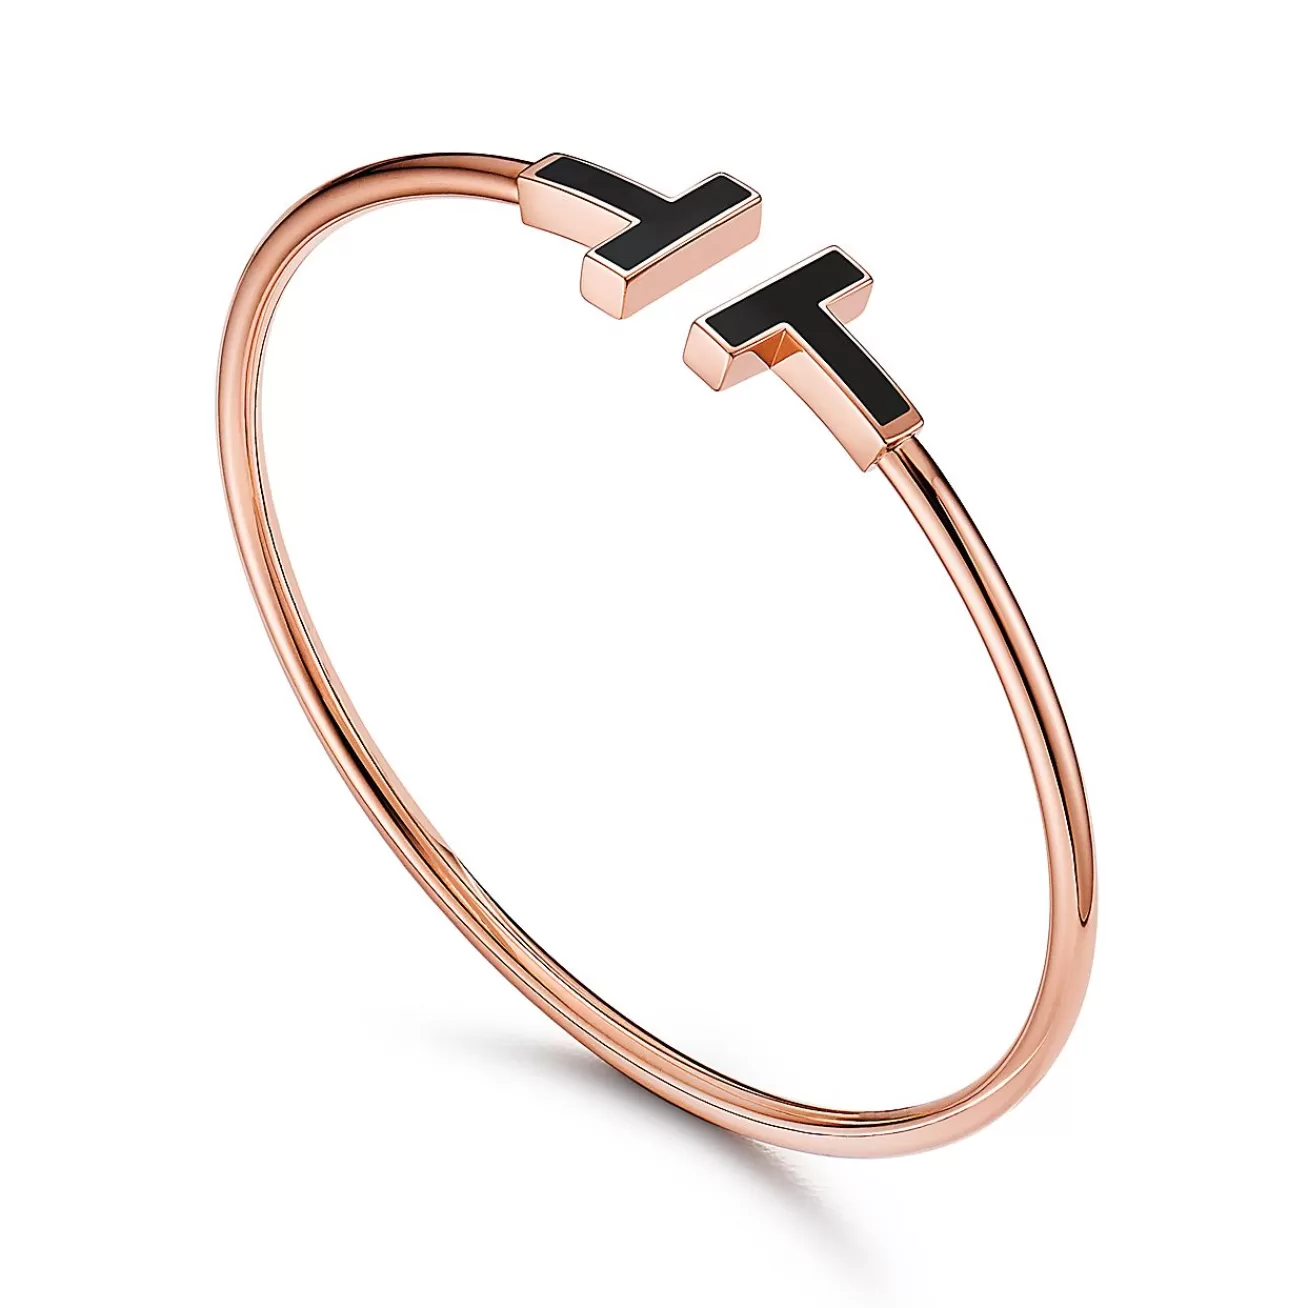 Tiffany & Co. Tiffany T black onyx wire bracelet in 18k rose gold, medium. | ^ Bracelets | Men's Jewelry